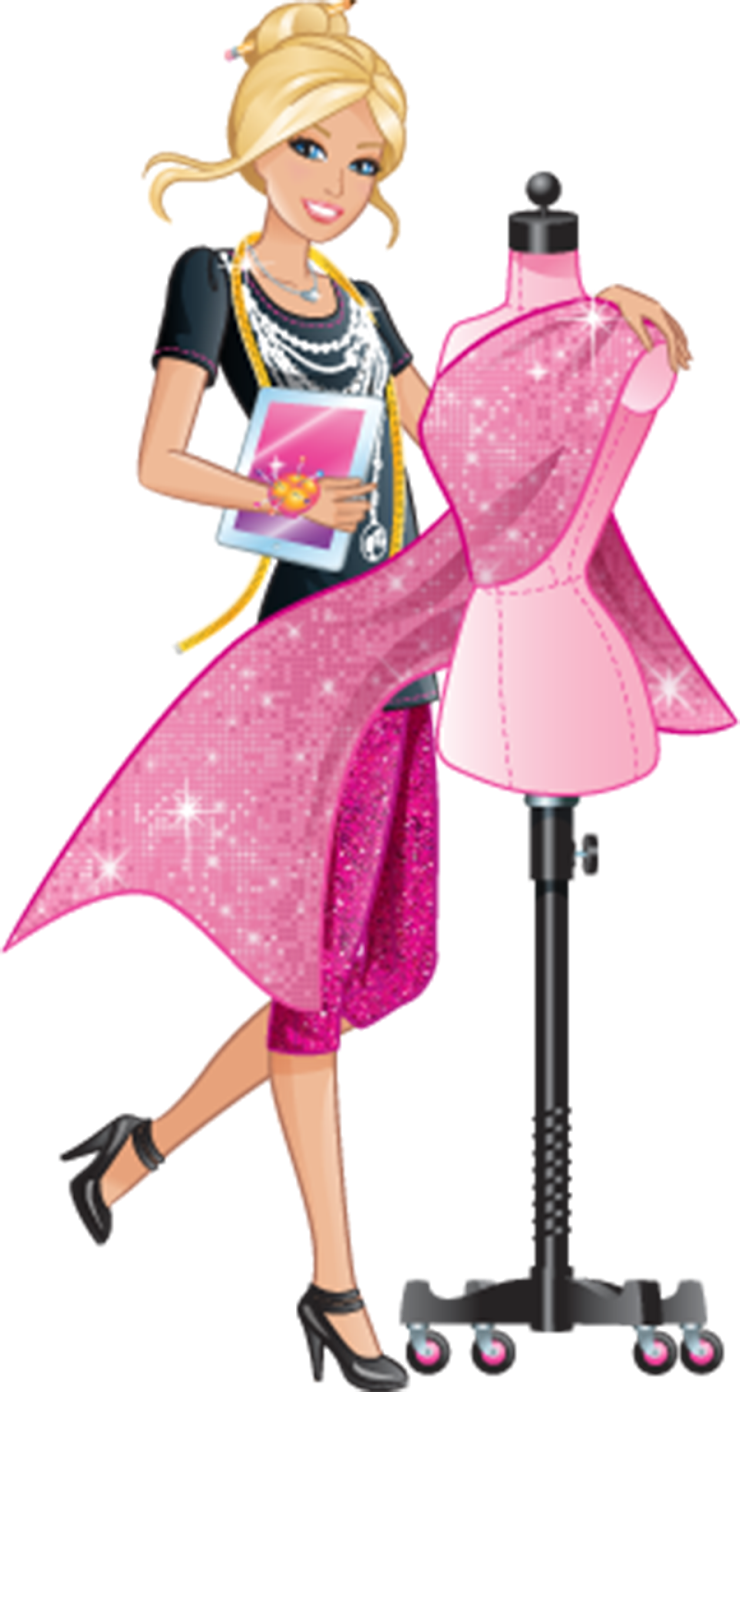 Barbie Girl PNG Image Background